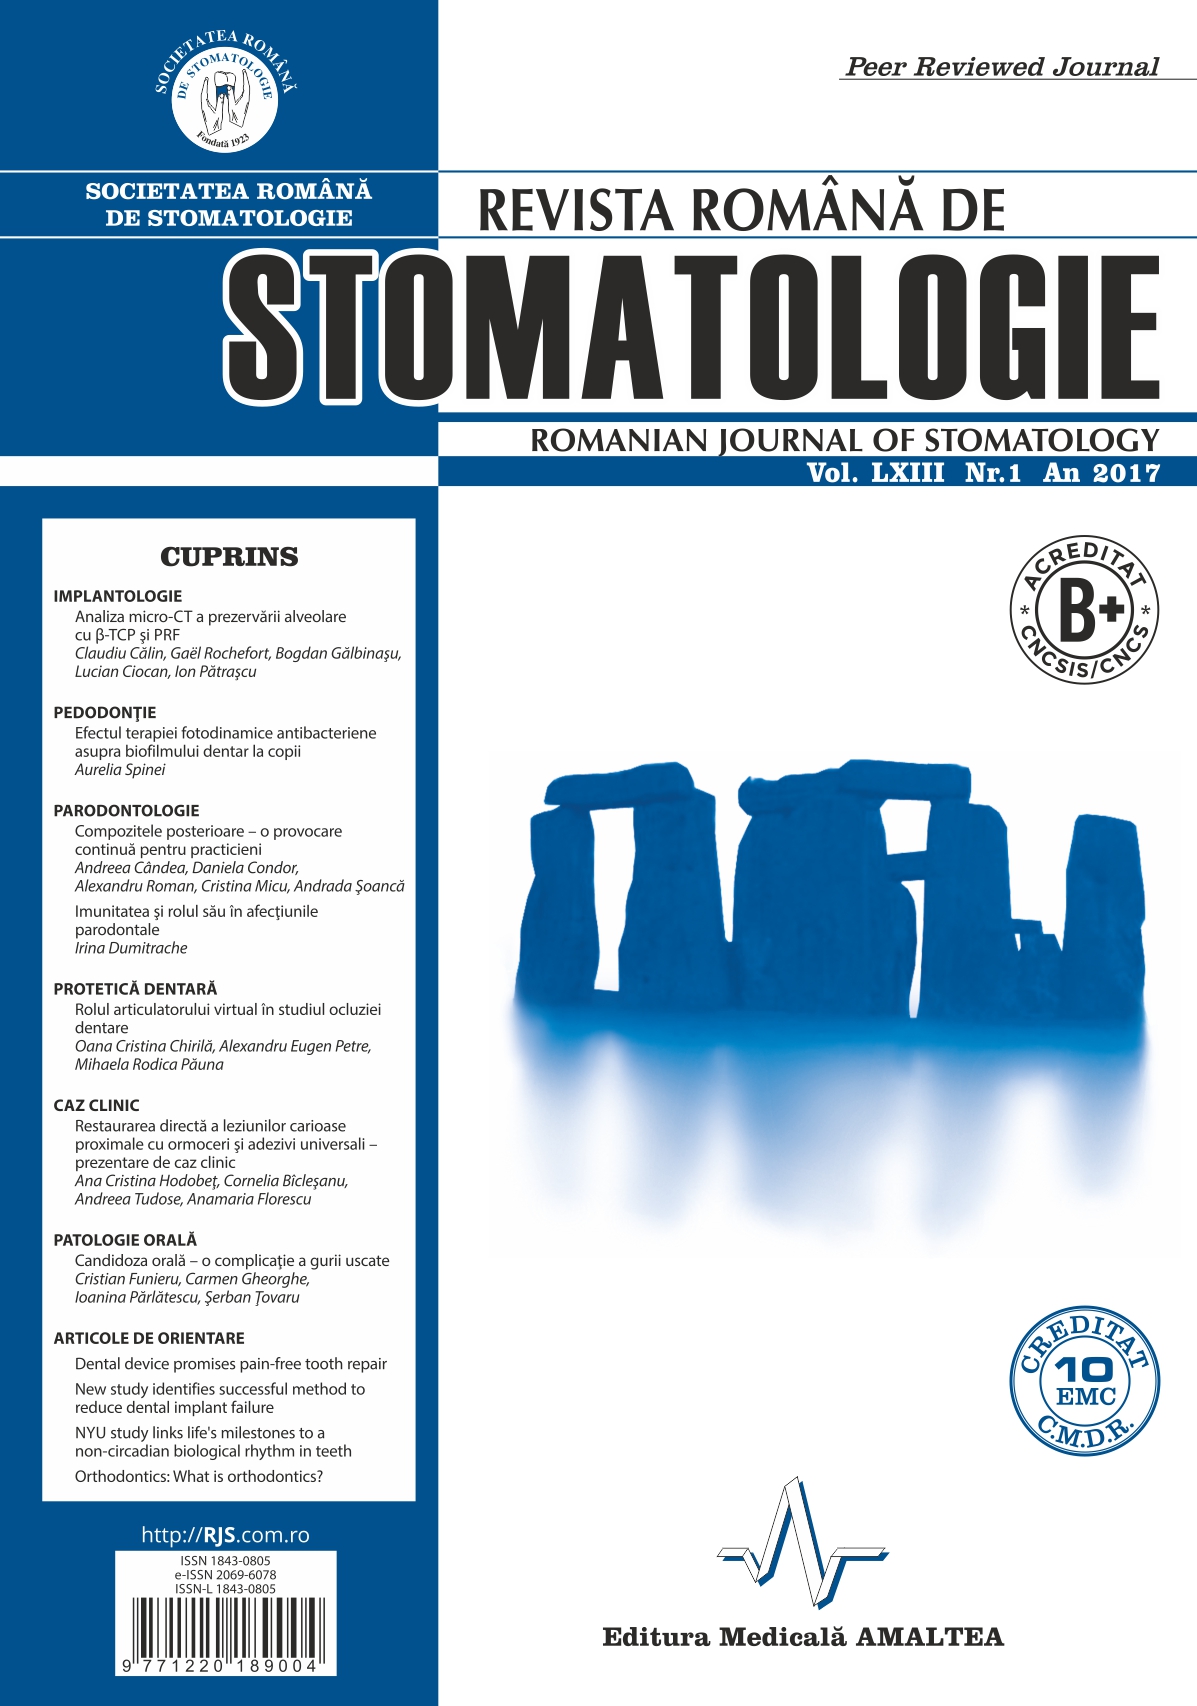 Revista Romana de STOMATOLOGIE - Romanian Journal of Stomatology, Vol. LXIII, Nr. 1, An 2017